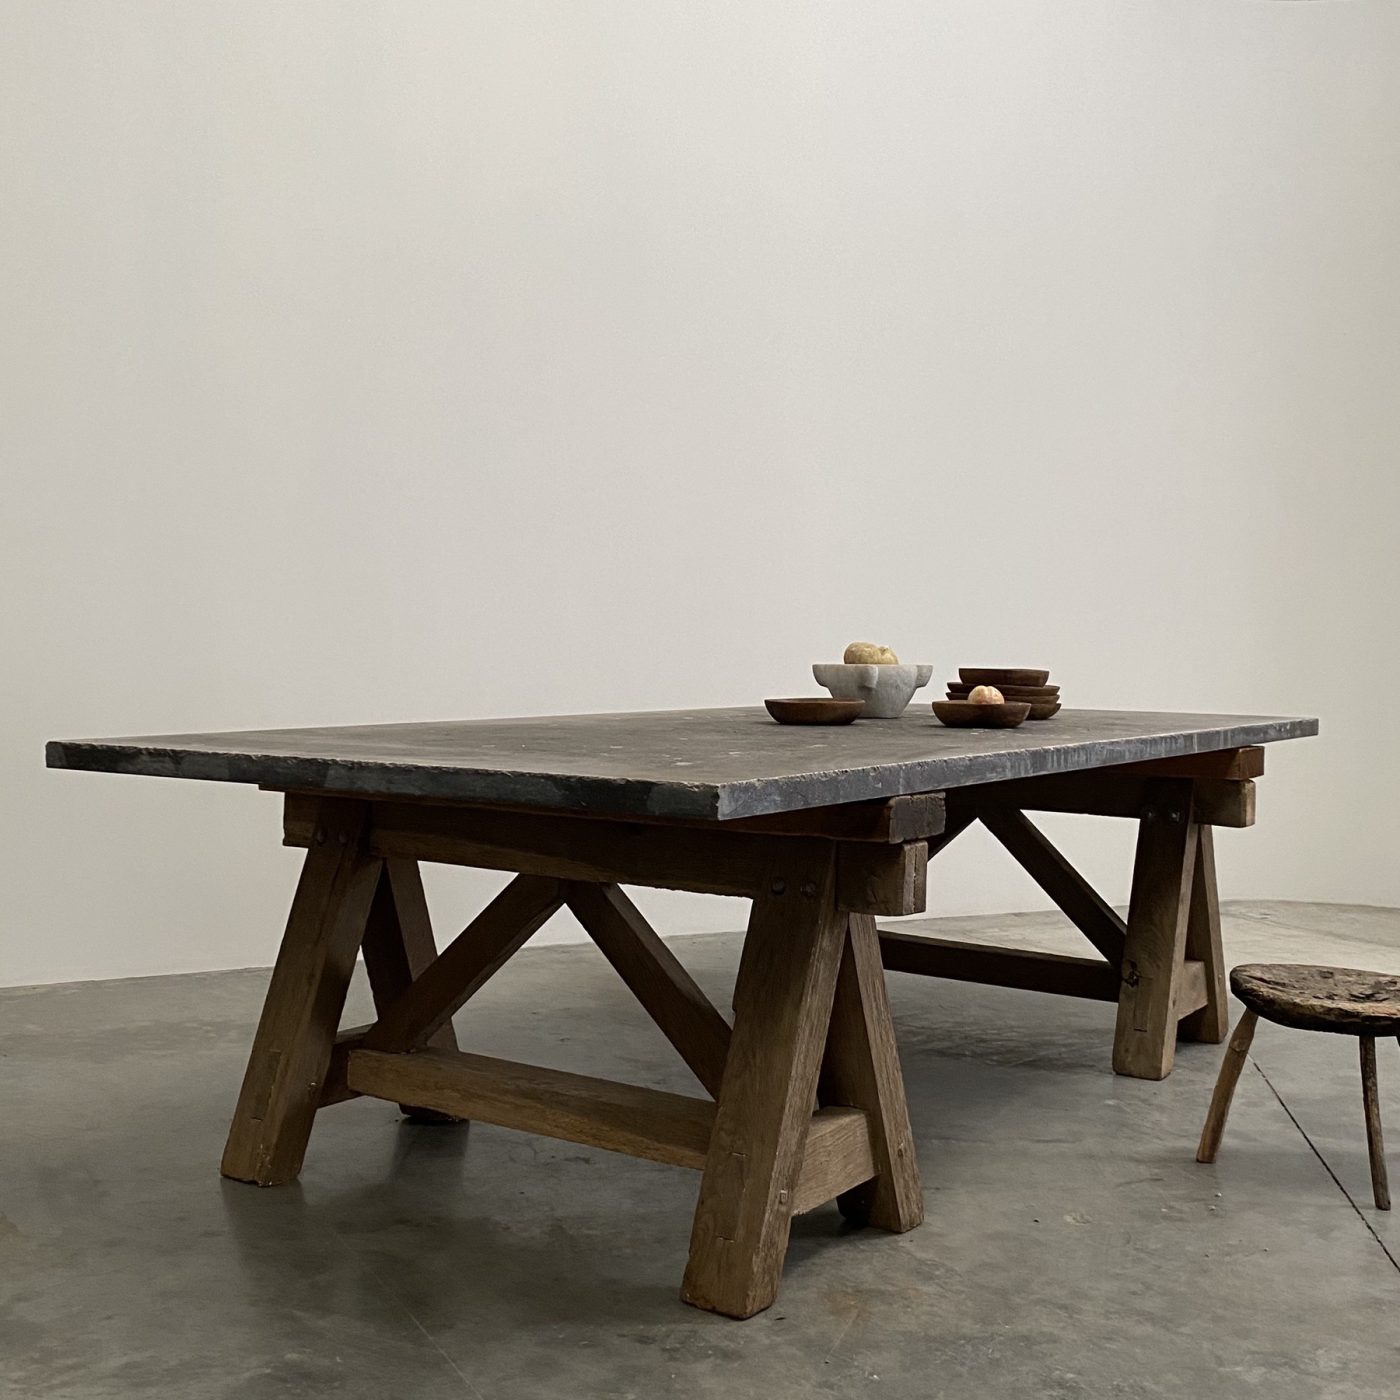 objet-vagabond-stone-table0007